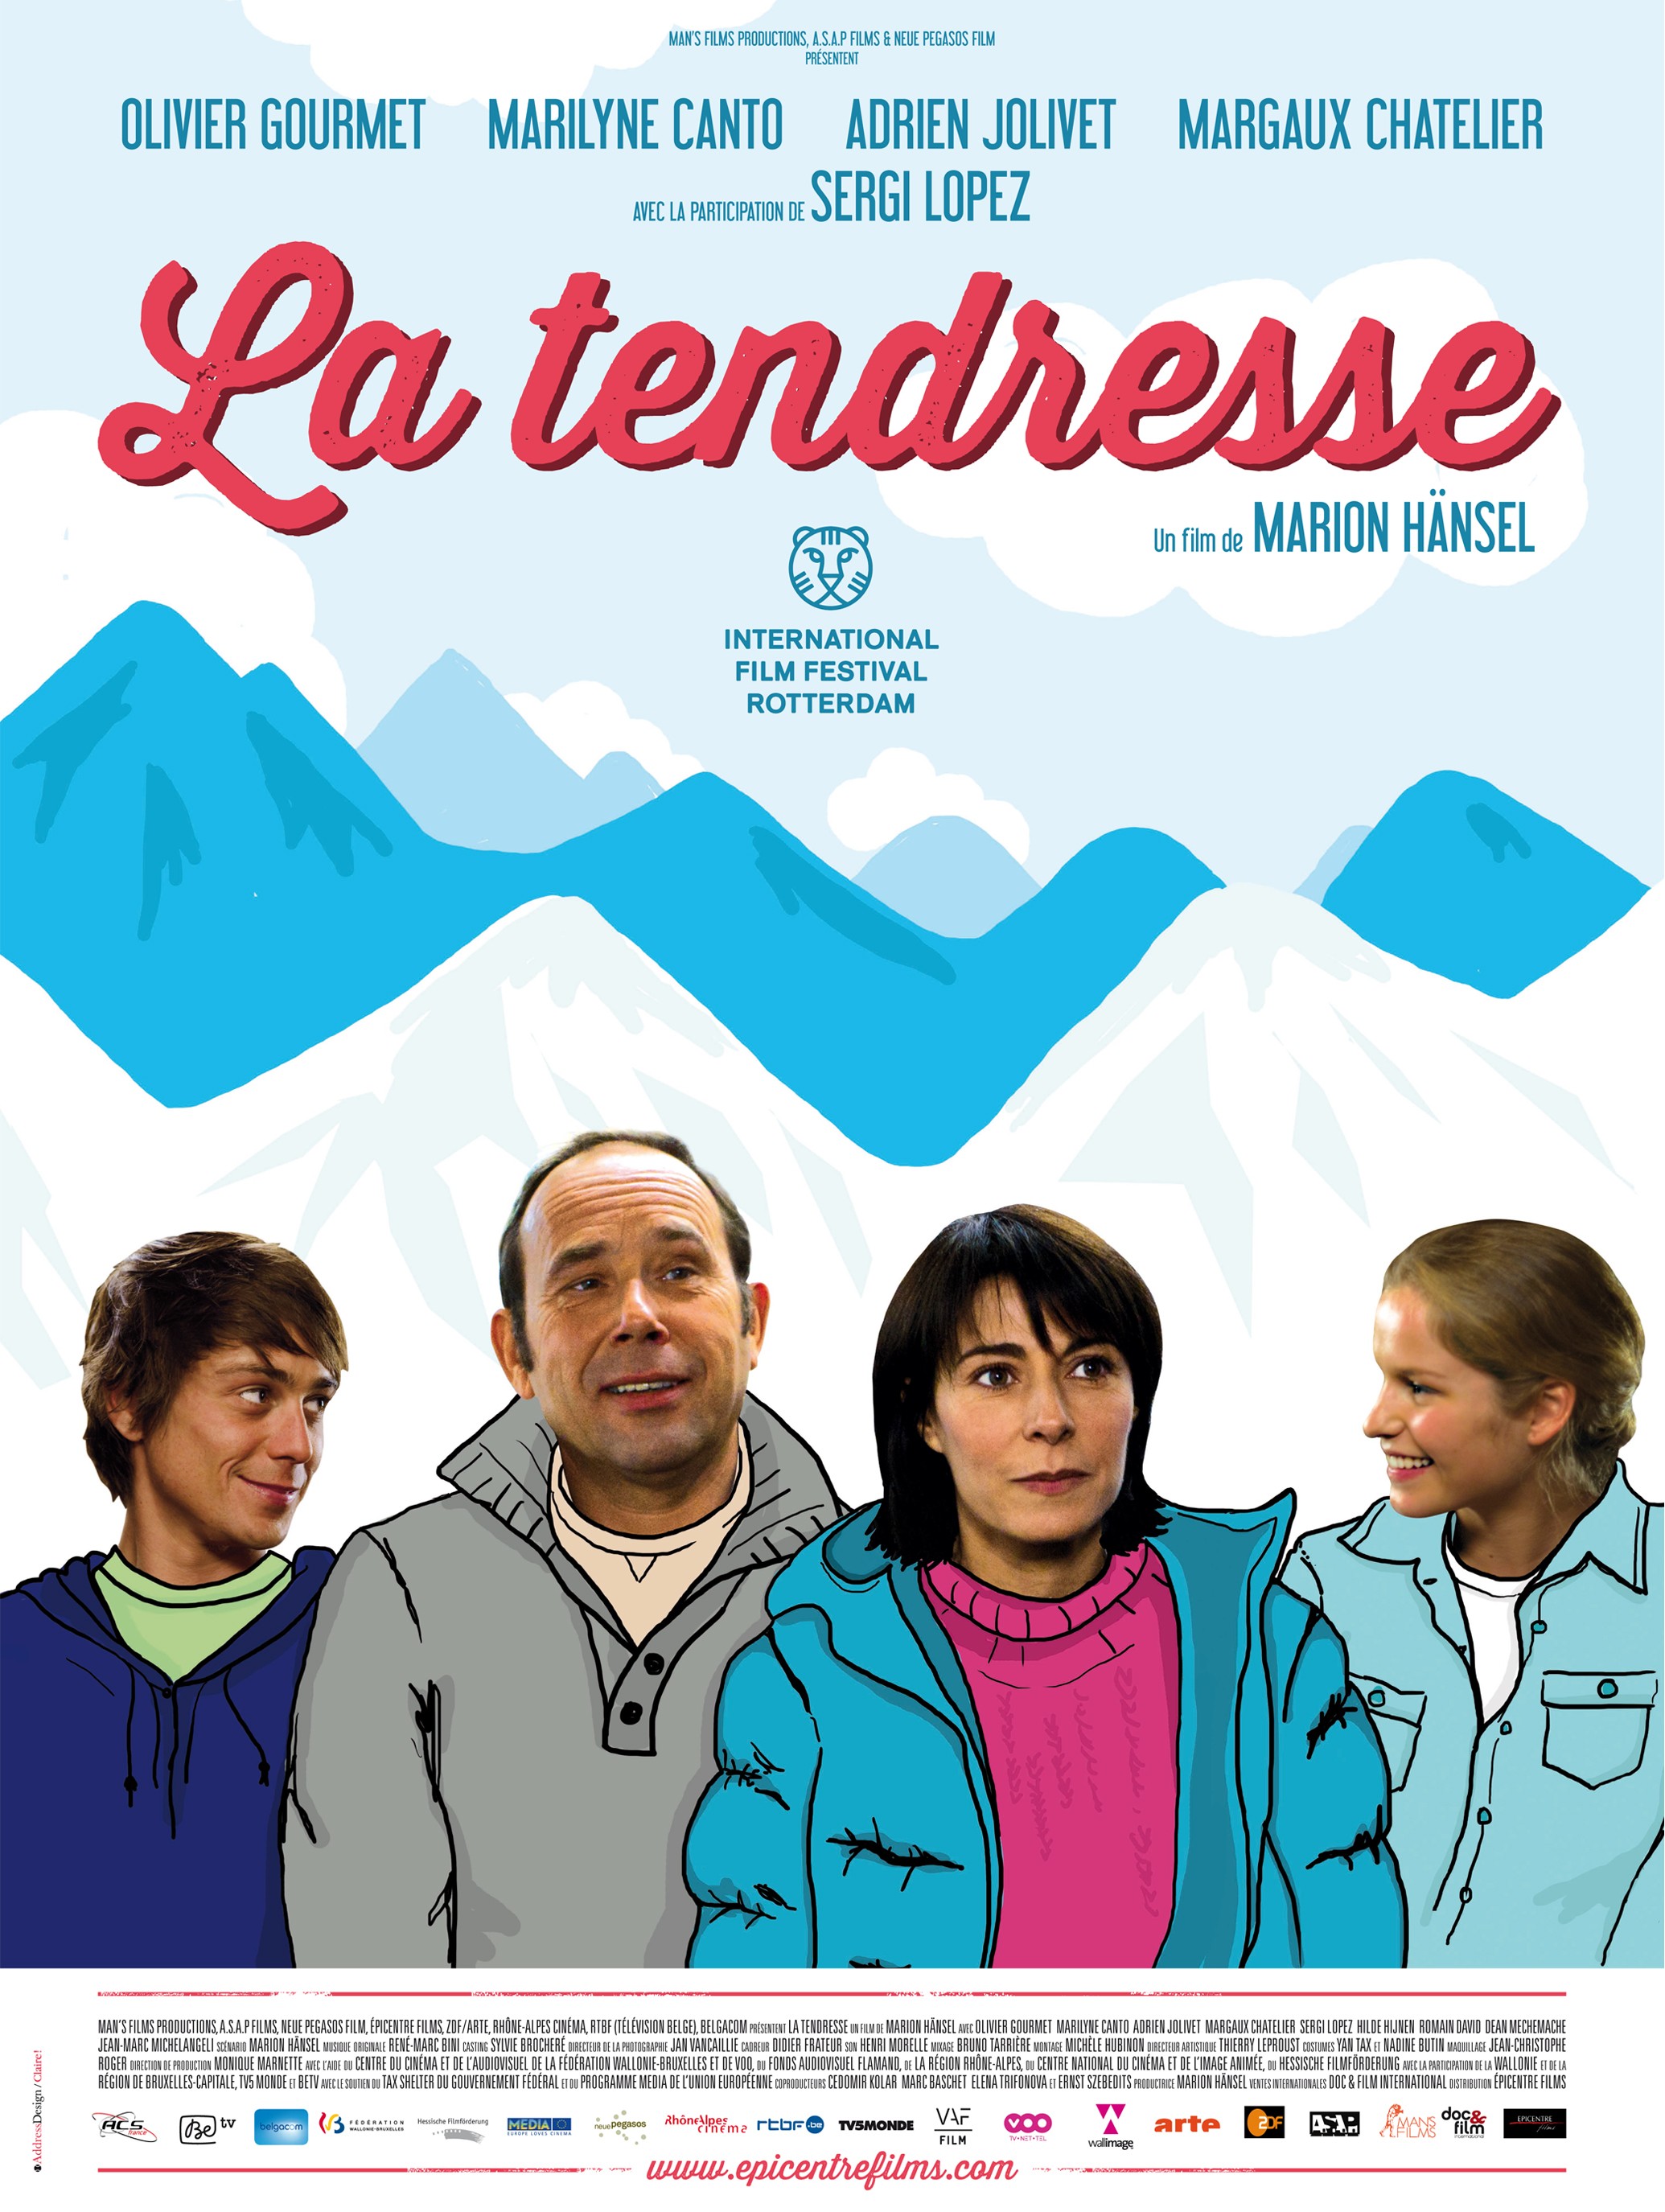 Mega Sized Movie Poster Image for La tendresse 